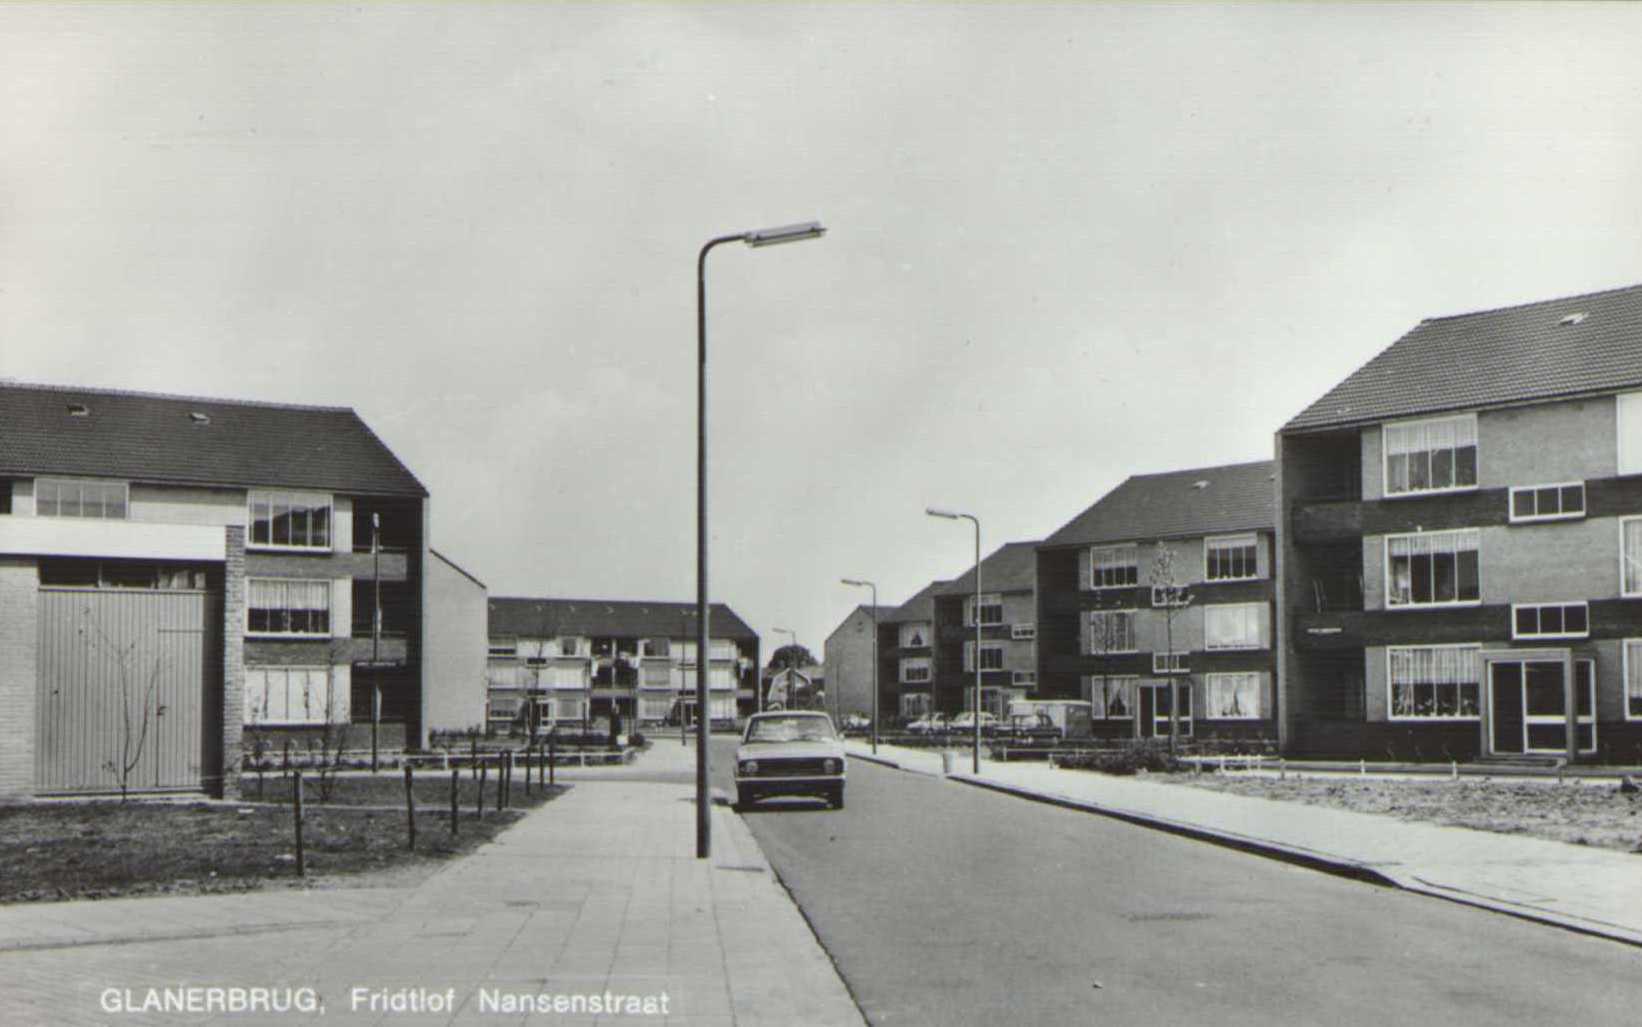 Glanerbrug-fridtlof-nansenstraat-1969.jpg